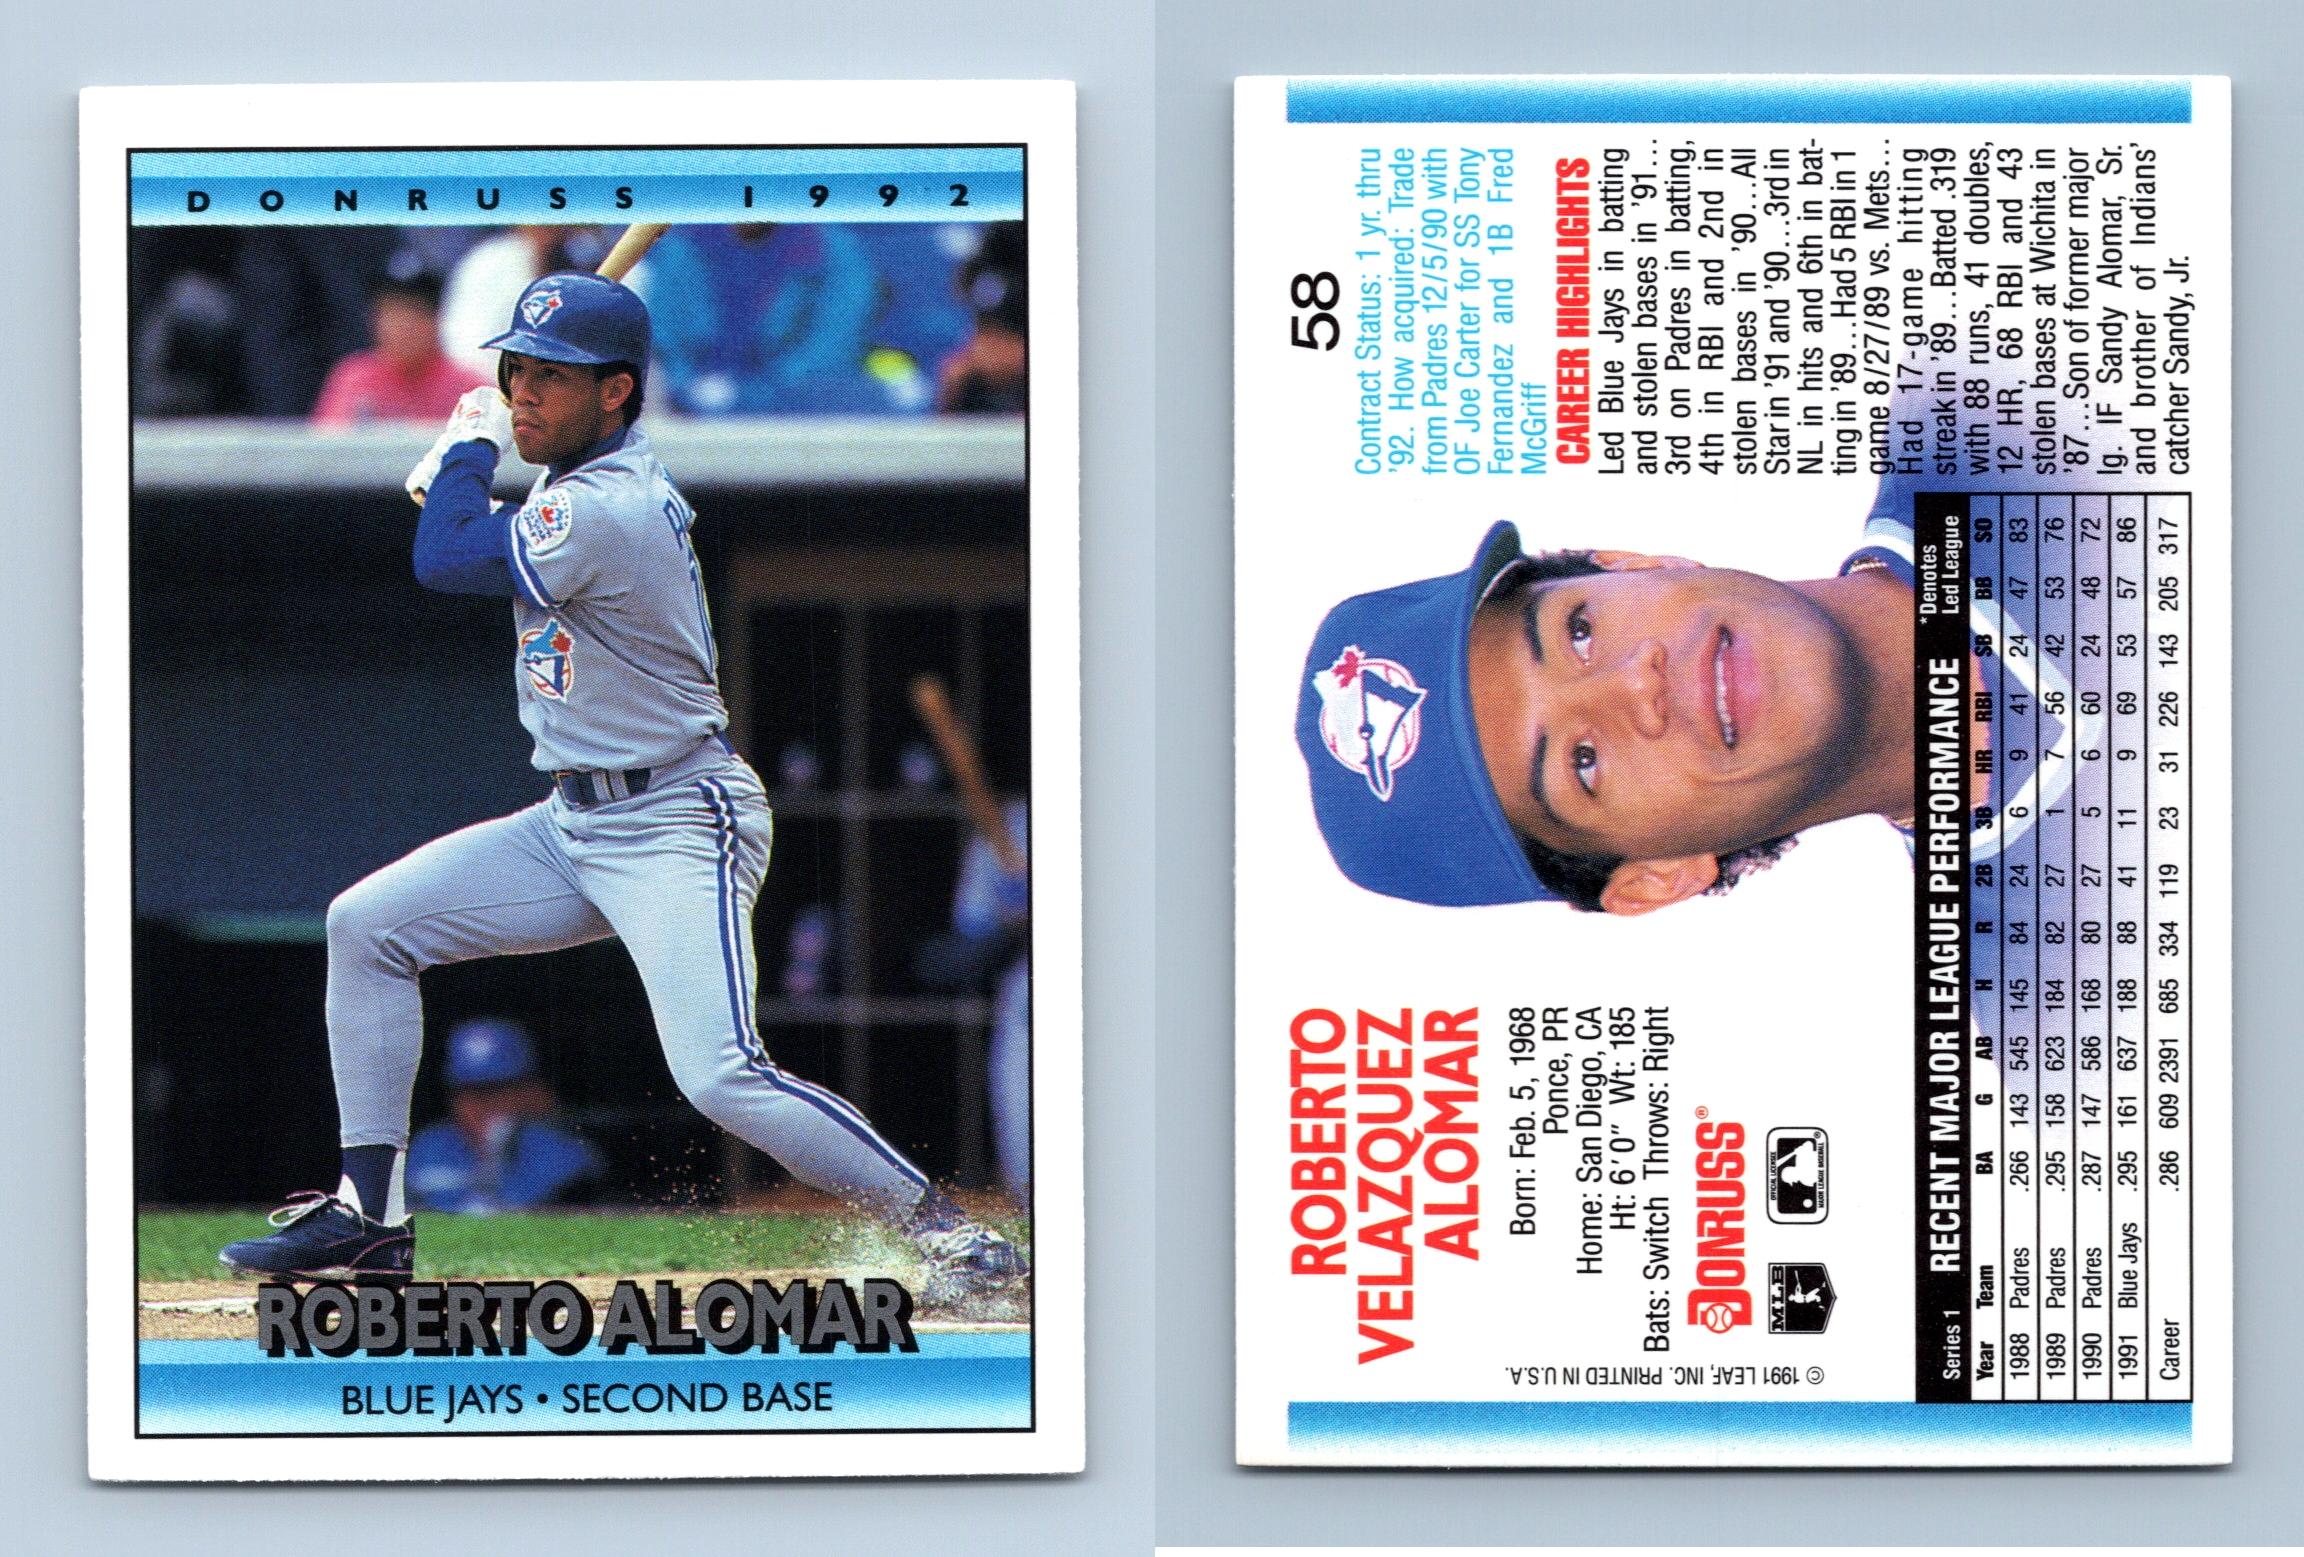 Roberto Alomar - Blue Jays #58 Donruss 1992 Baseball Trading Card